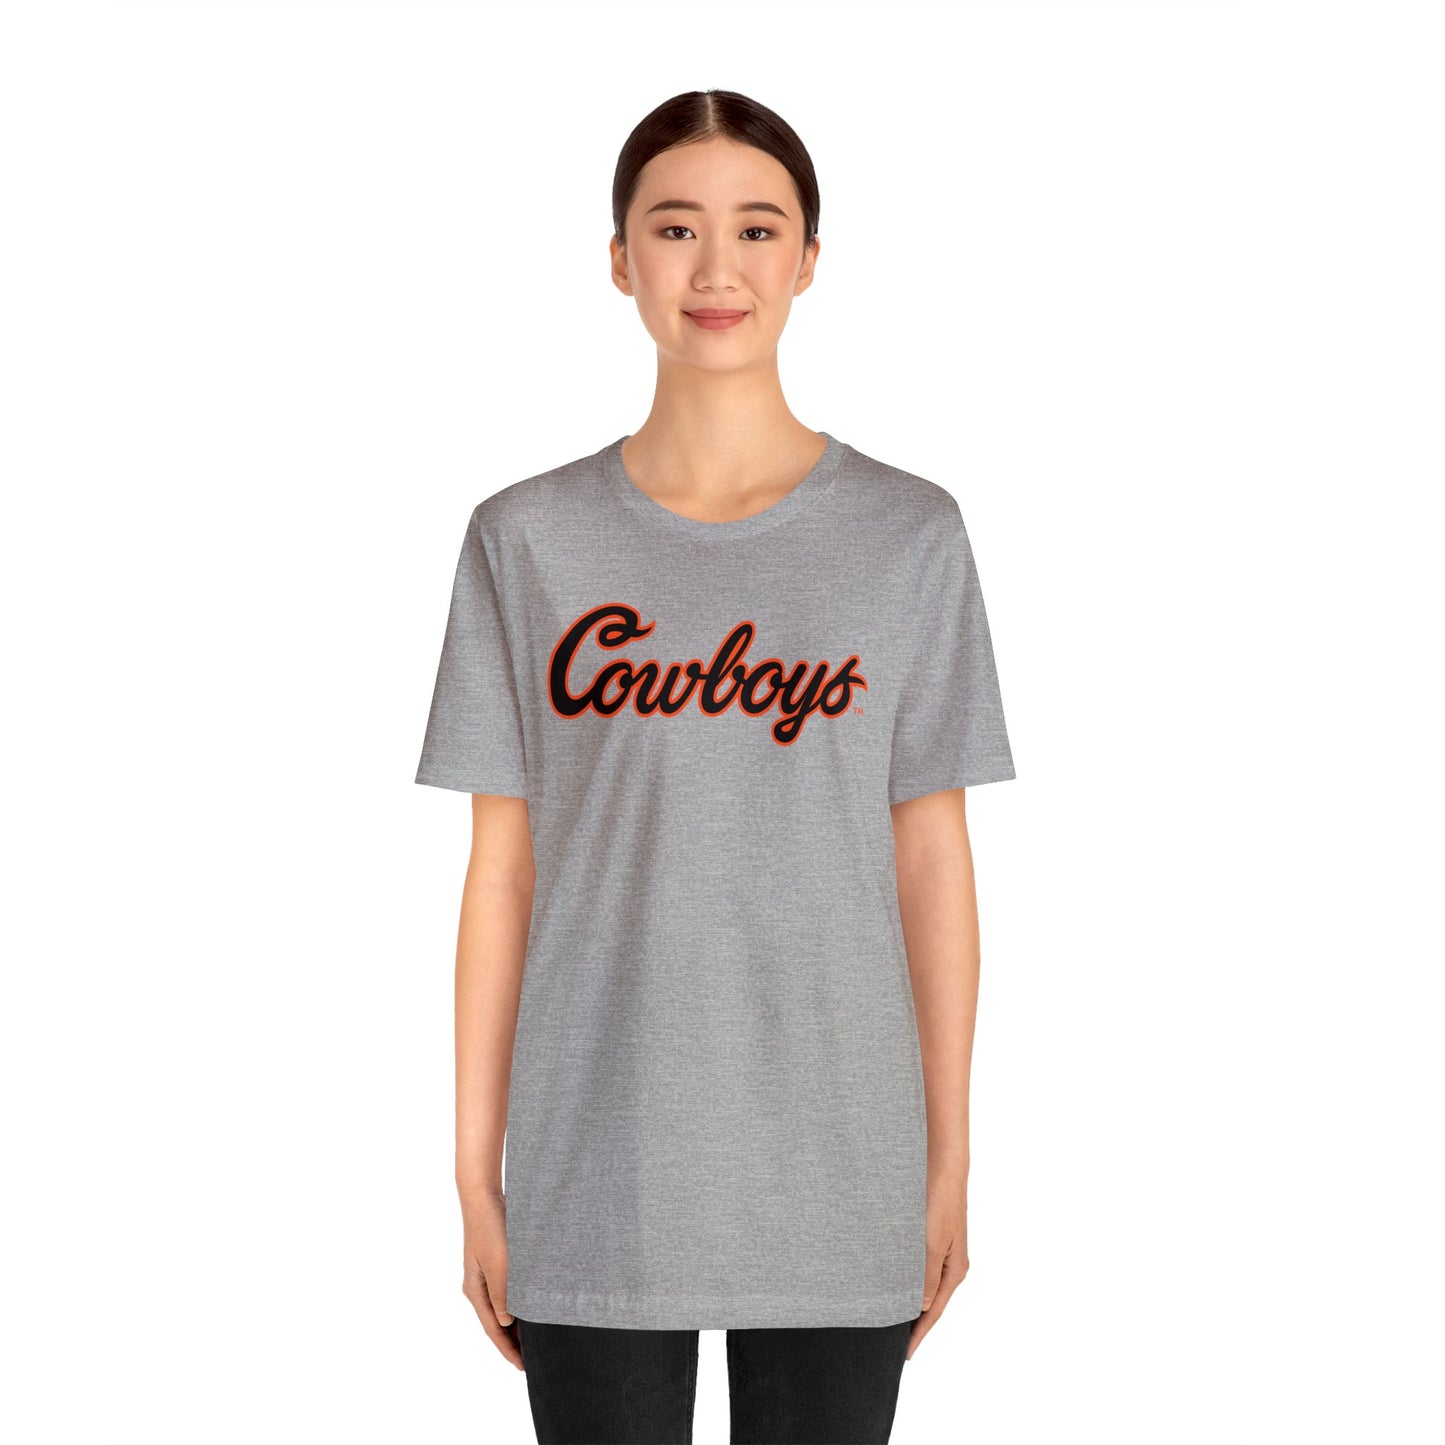 Collin Clay #93 Cursive Cowboys T-Shirt